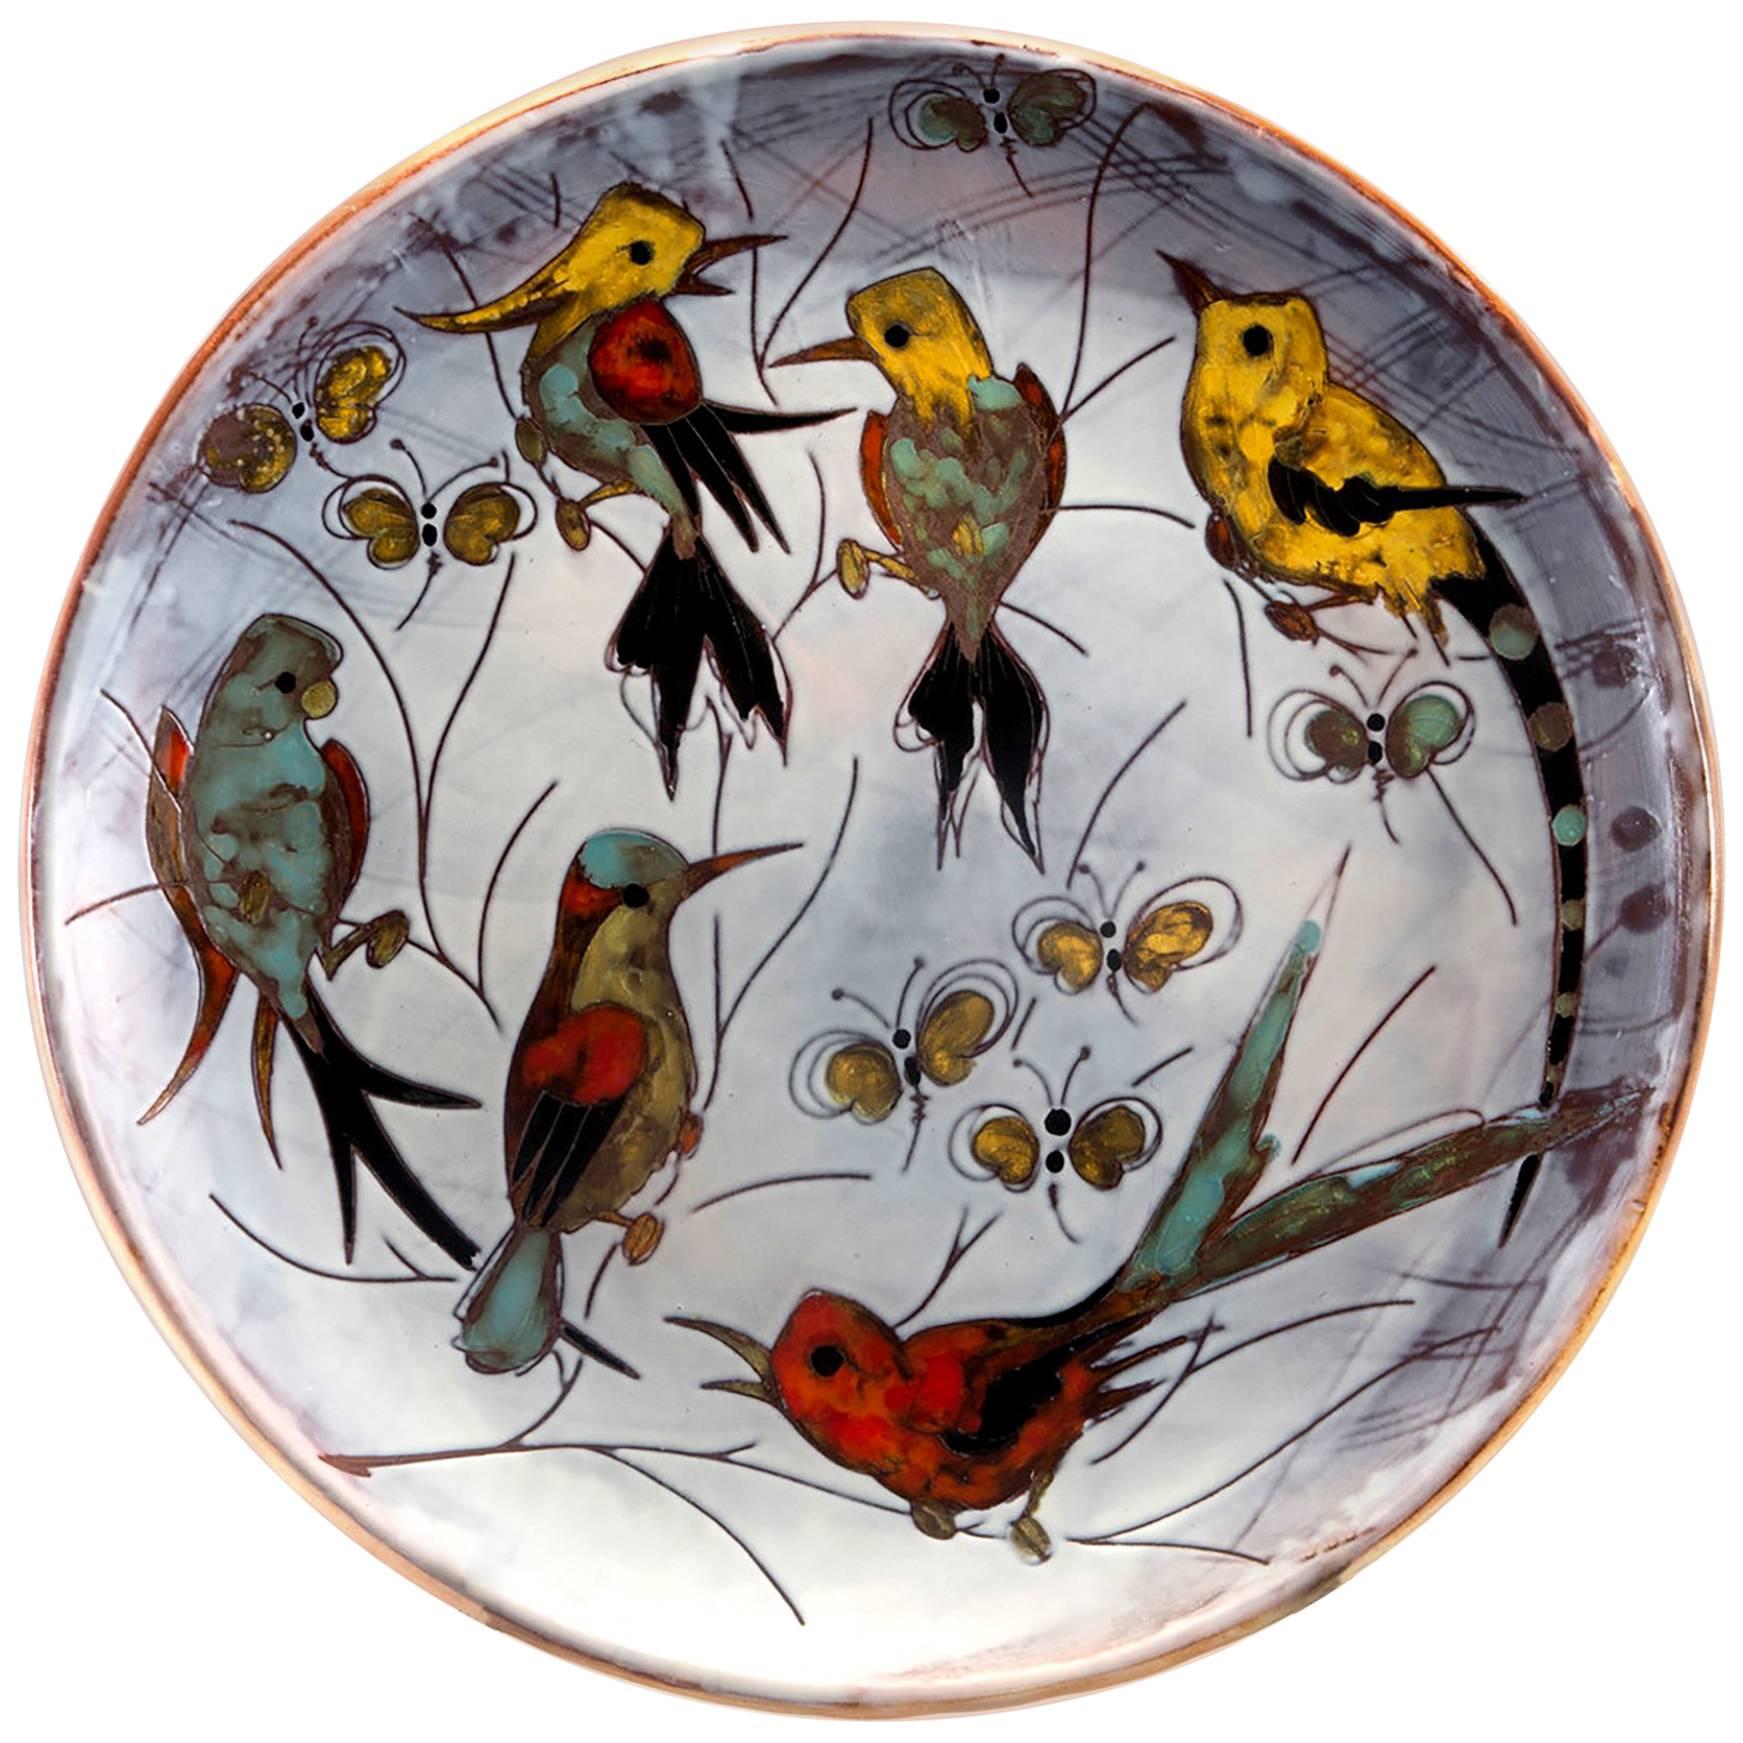 Extra Large Round Ceramic Vallauris Platter with Birds